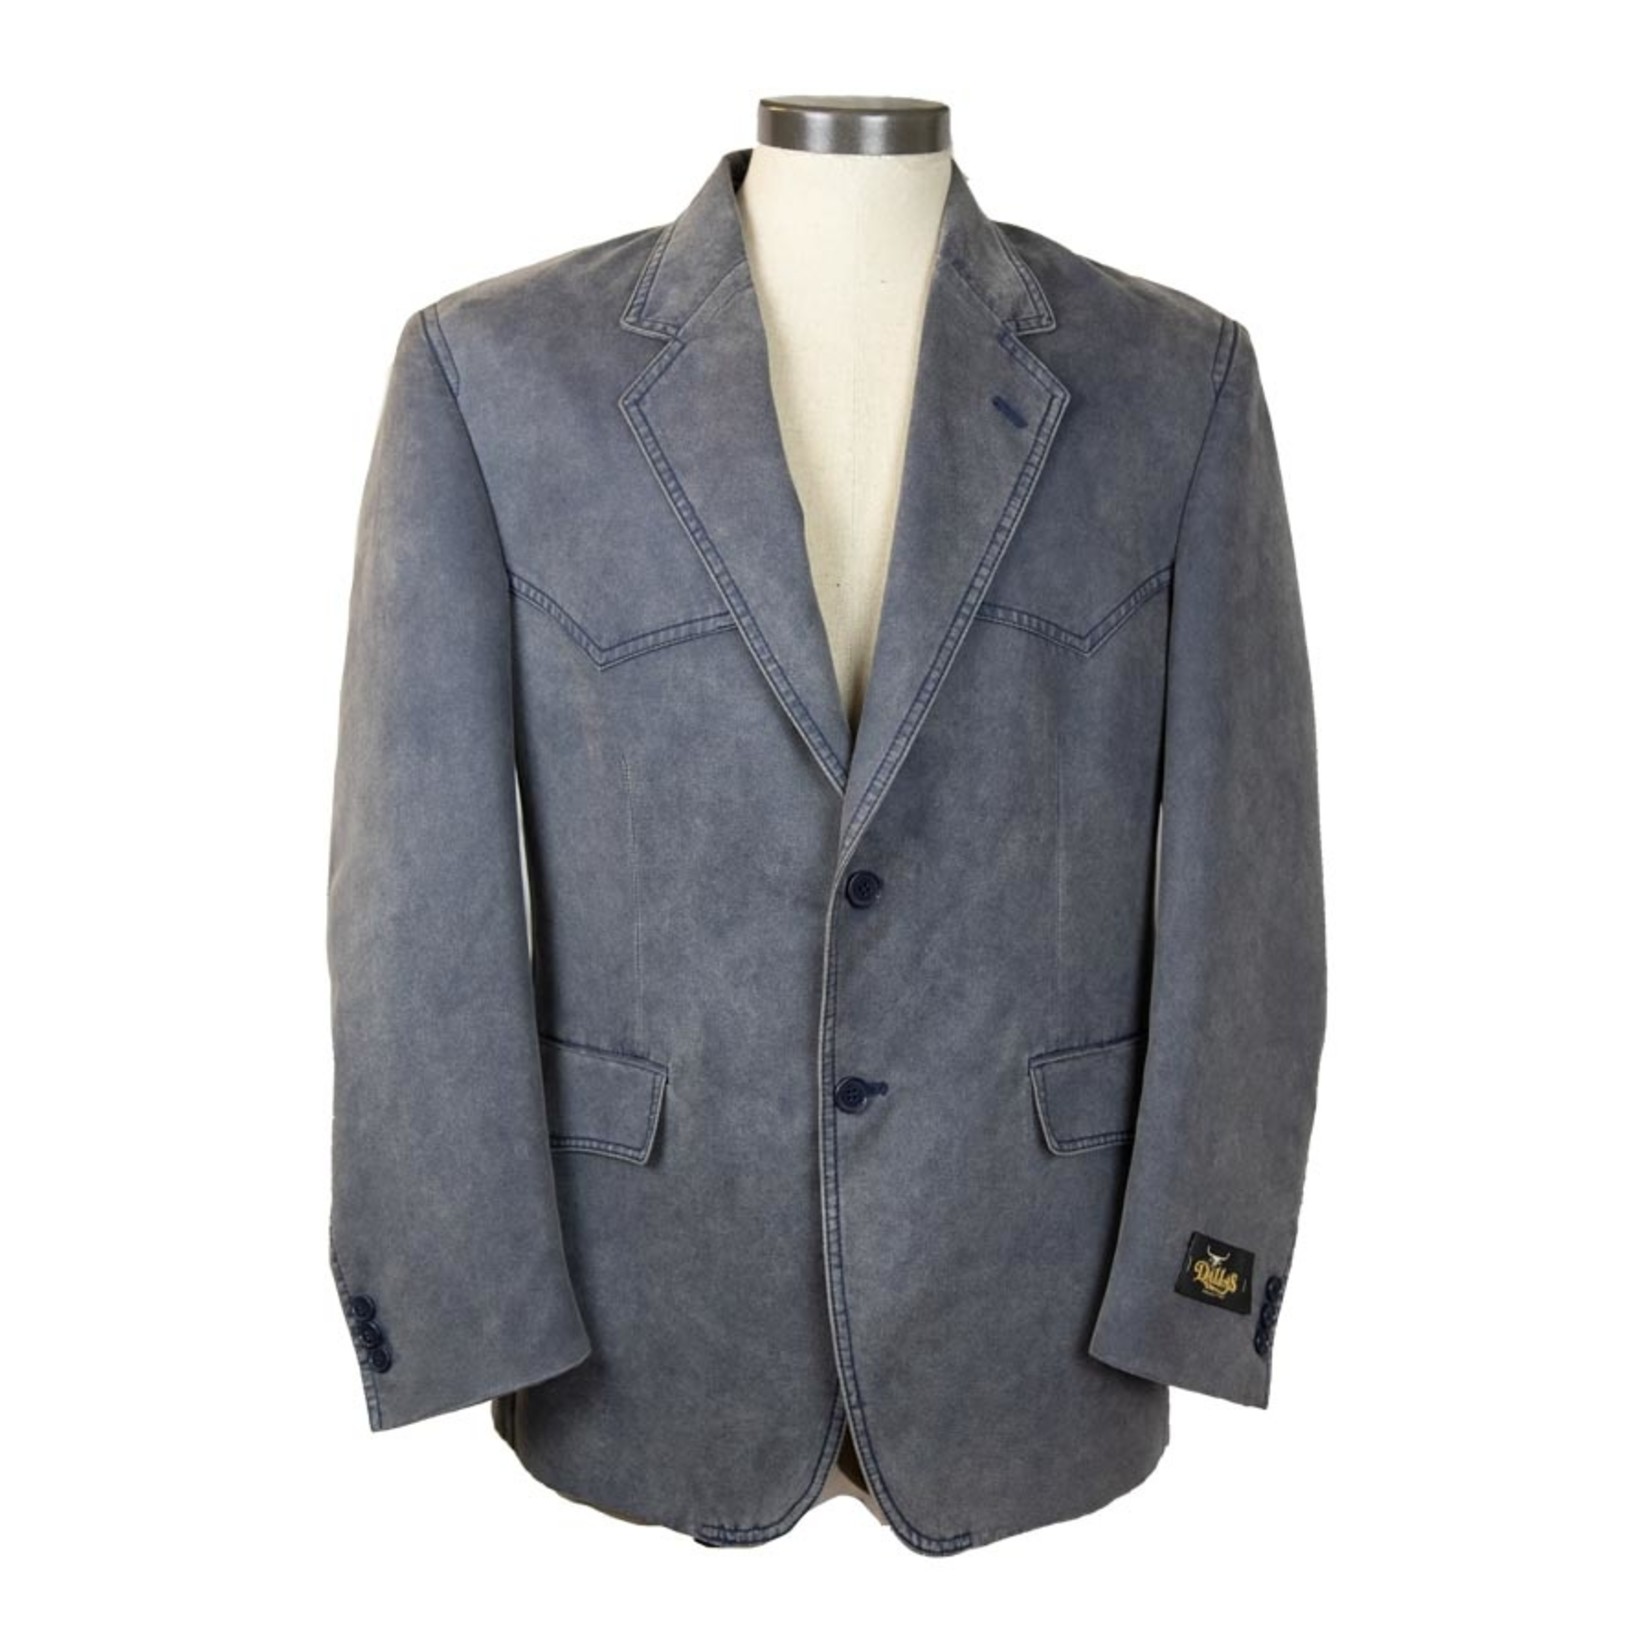 Dallas 100% Polyester Vintage Suit Jacket - Size 40 - #31